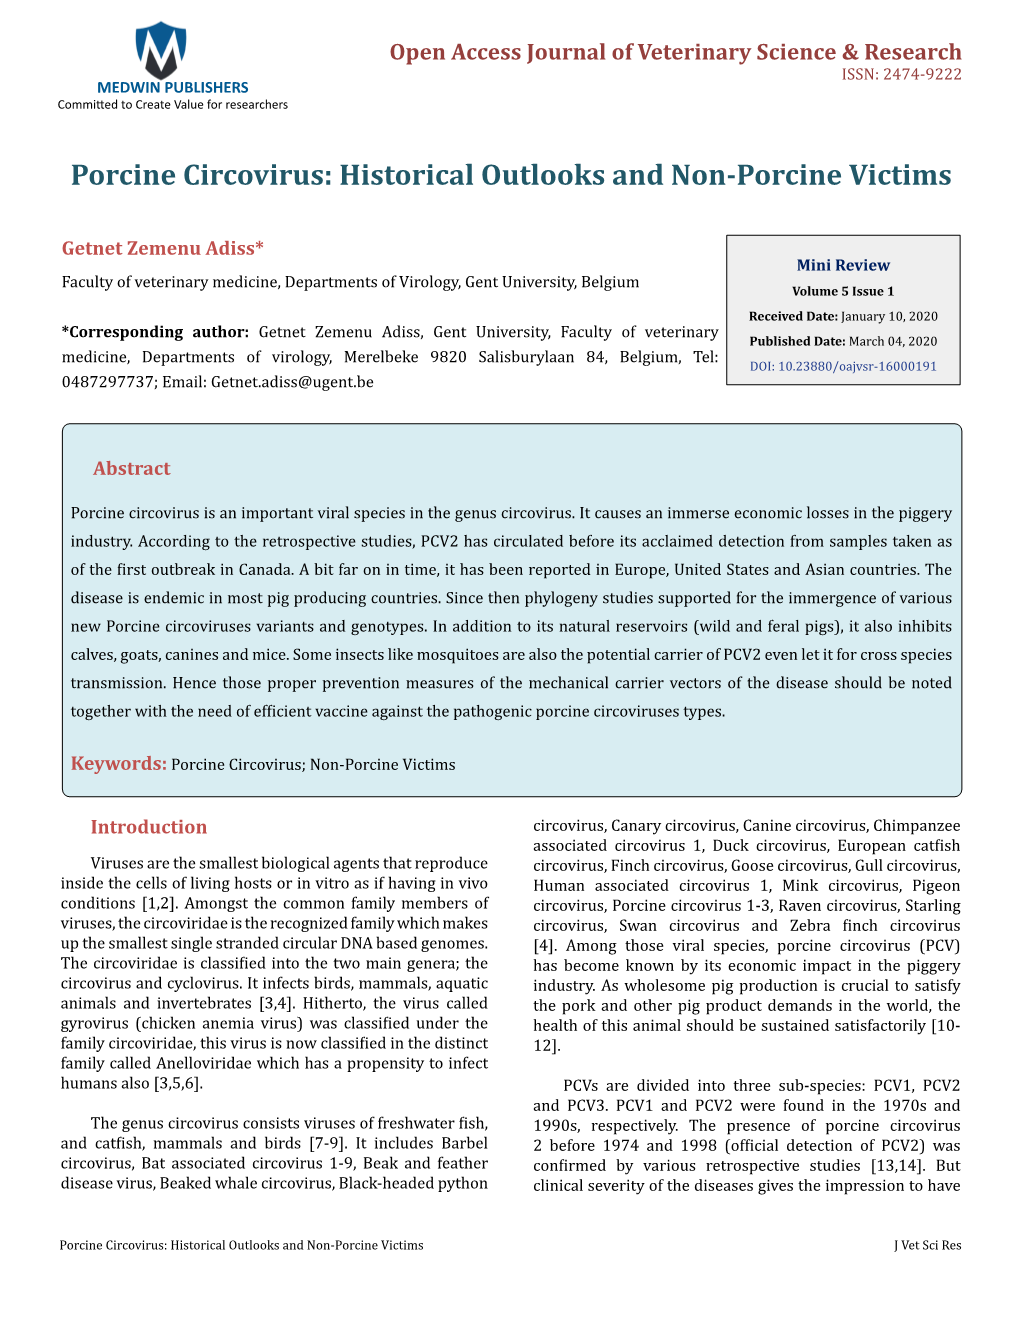 Porcine Circovirus: Historical Outlooks and Non-Porcine Victims